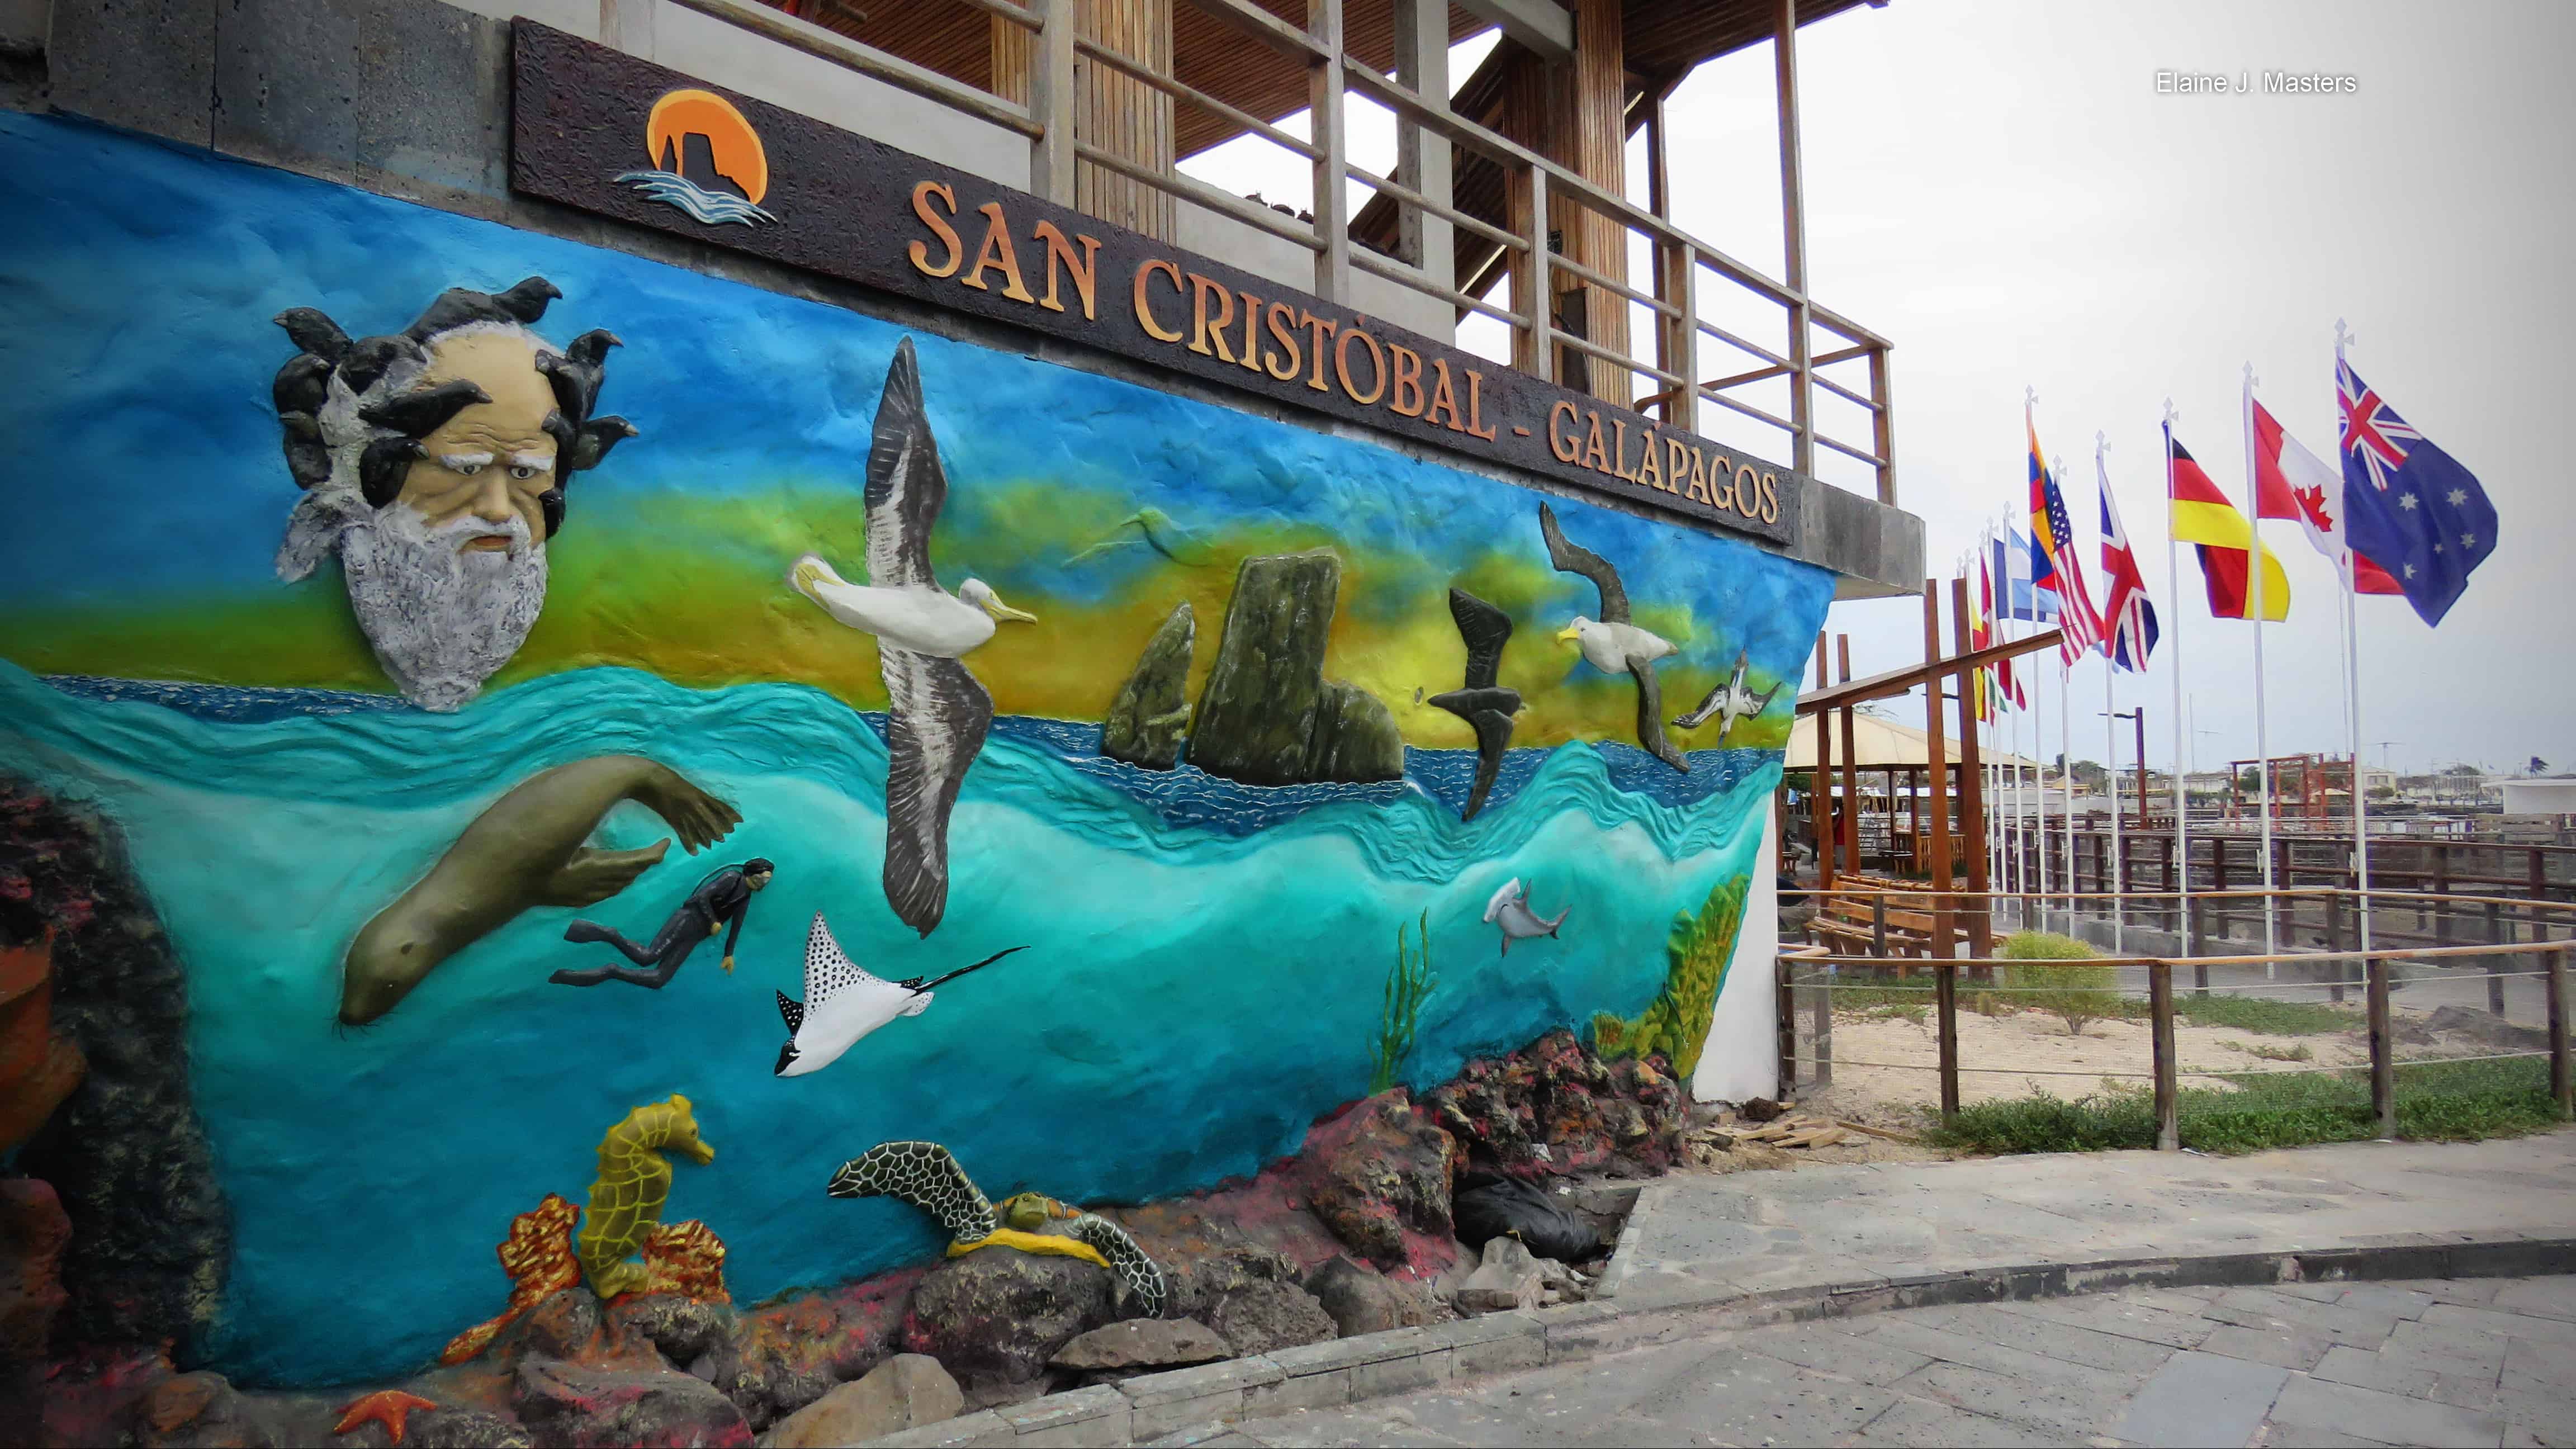 San Cristobal Mural Galapagos Islands